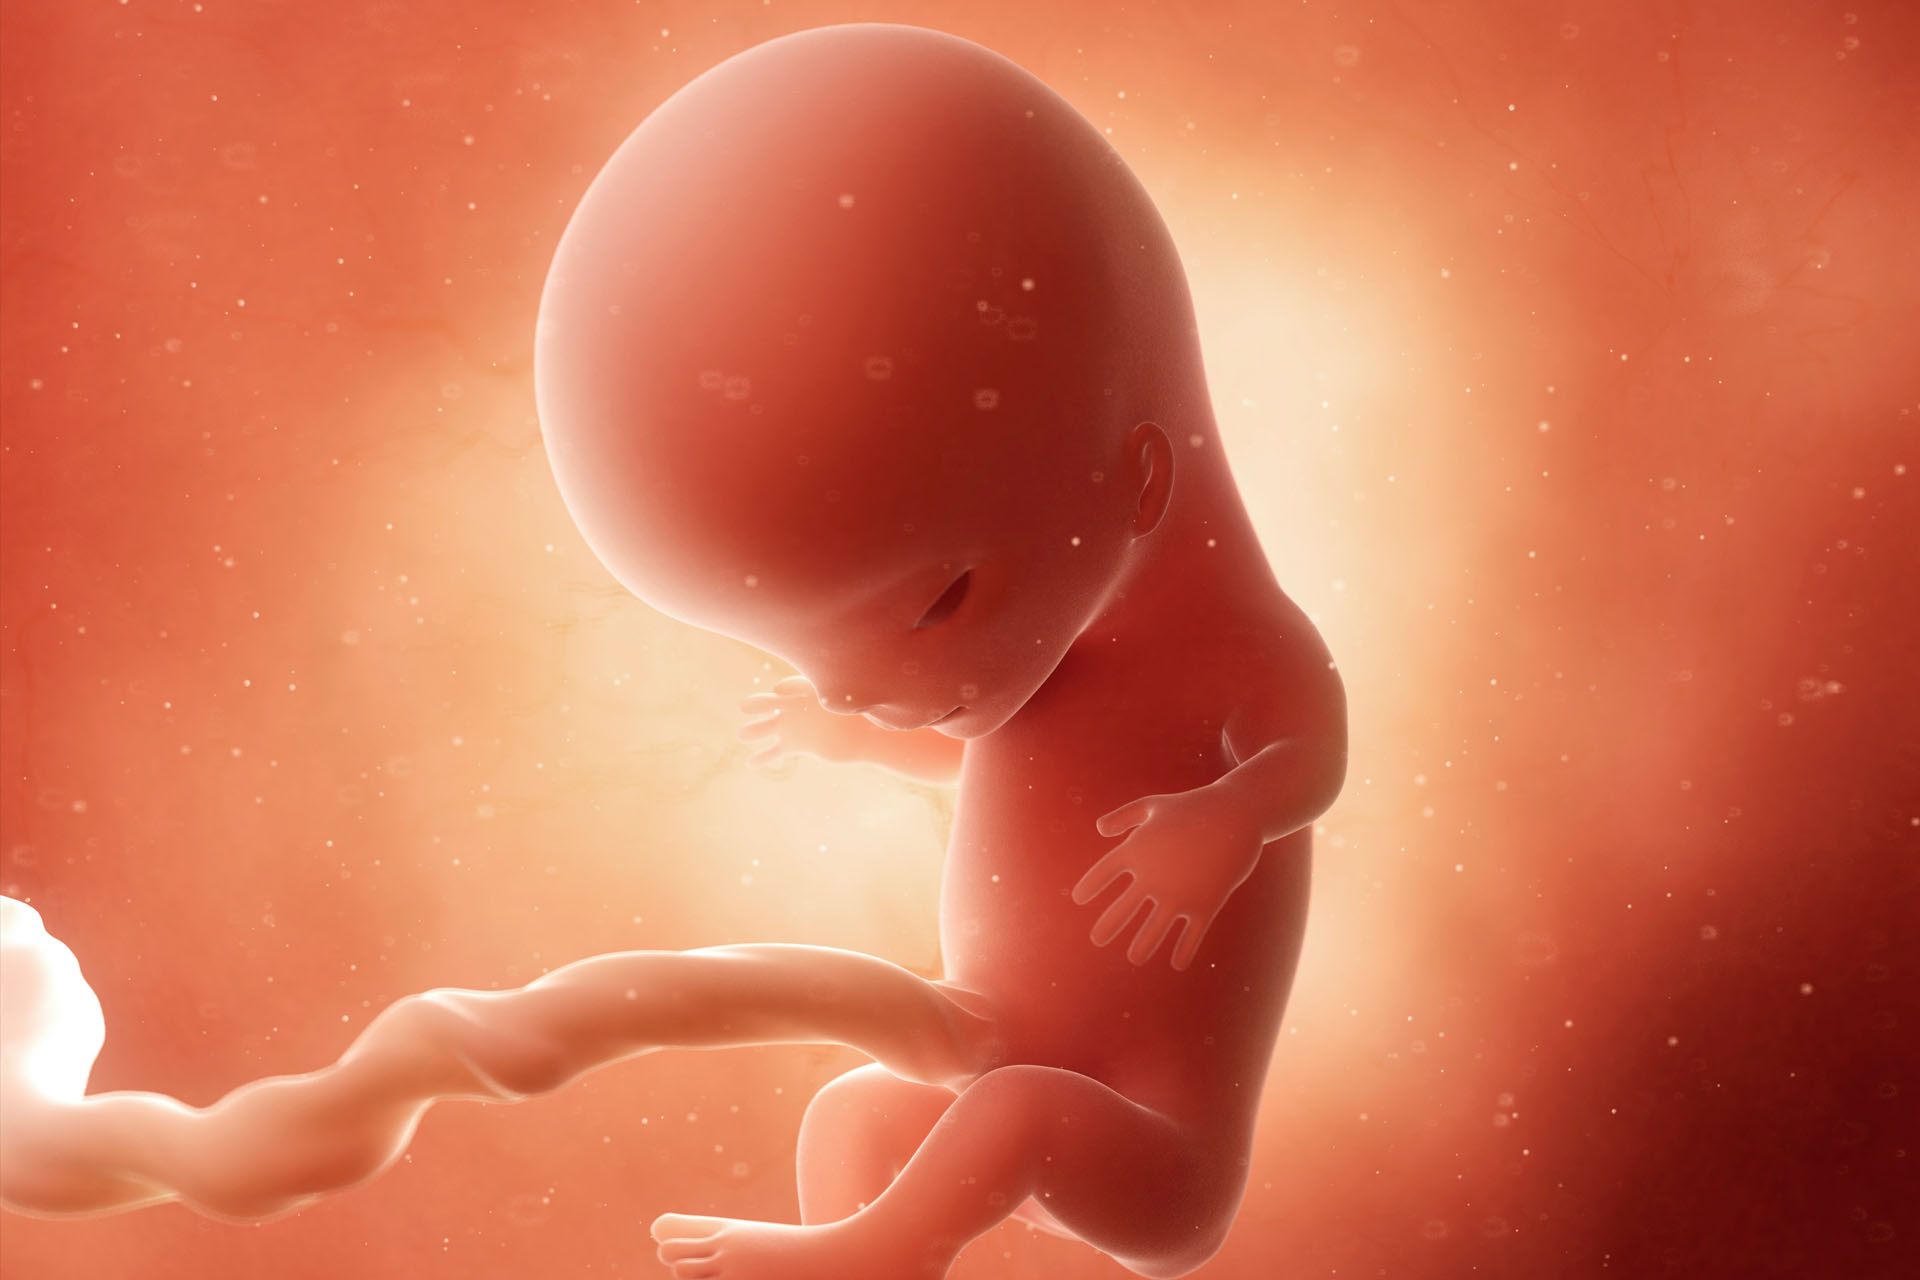 На 11 неделе тянет. Эмбрион на 11 неделе беременности. Ребёнок 11 недель беременности эмбрион. Ребёнок в утробе 11 недель беременности. Ребёнок в 11 нелел беременности.